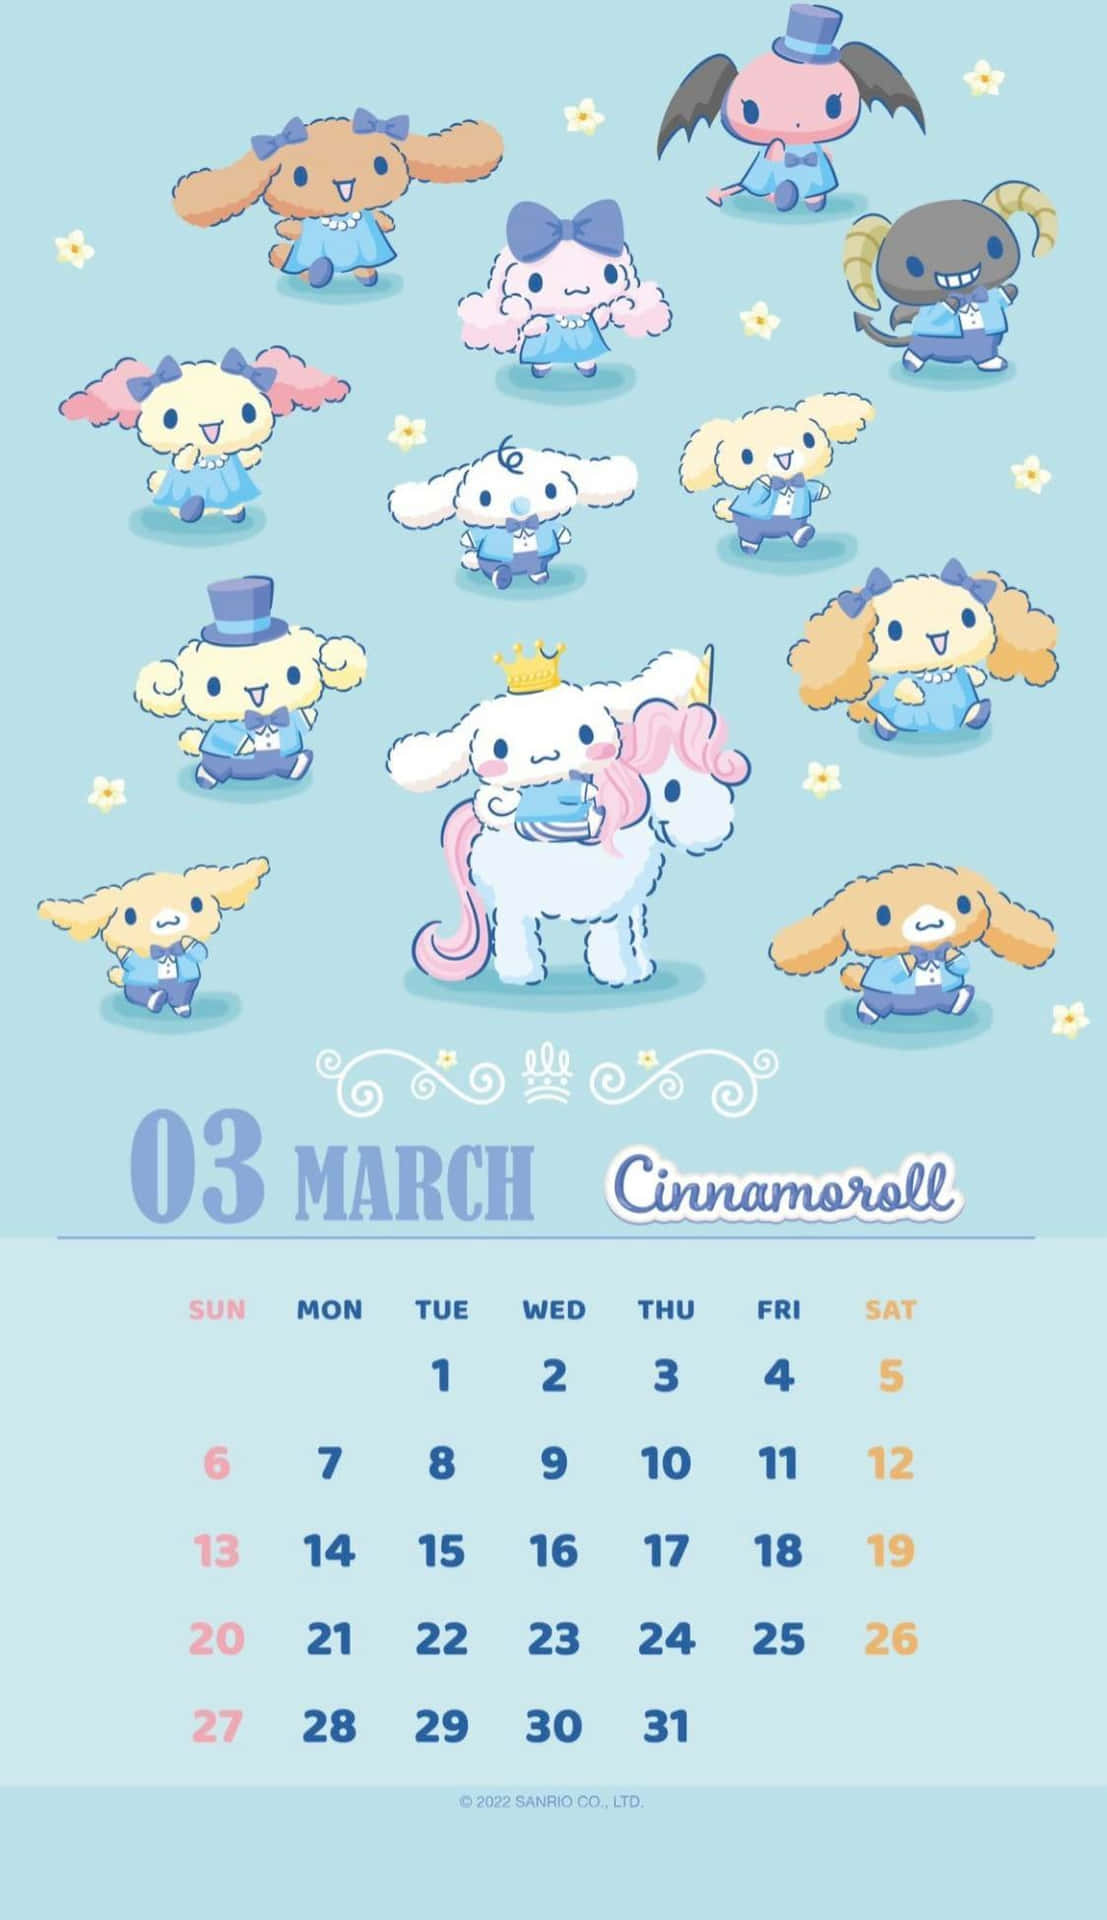 Cute-as-can-be Cinnamoroll from Sanrio! Wallpaper